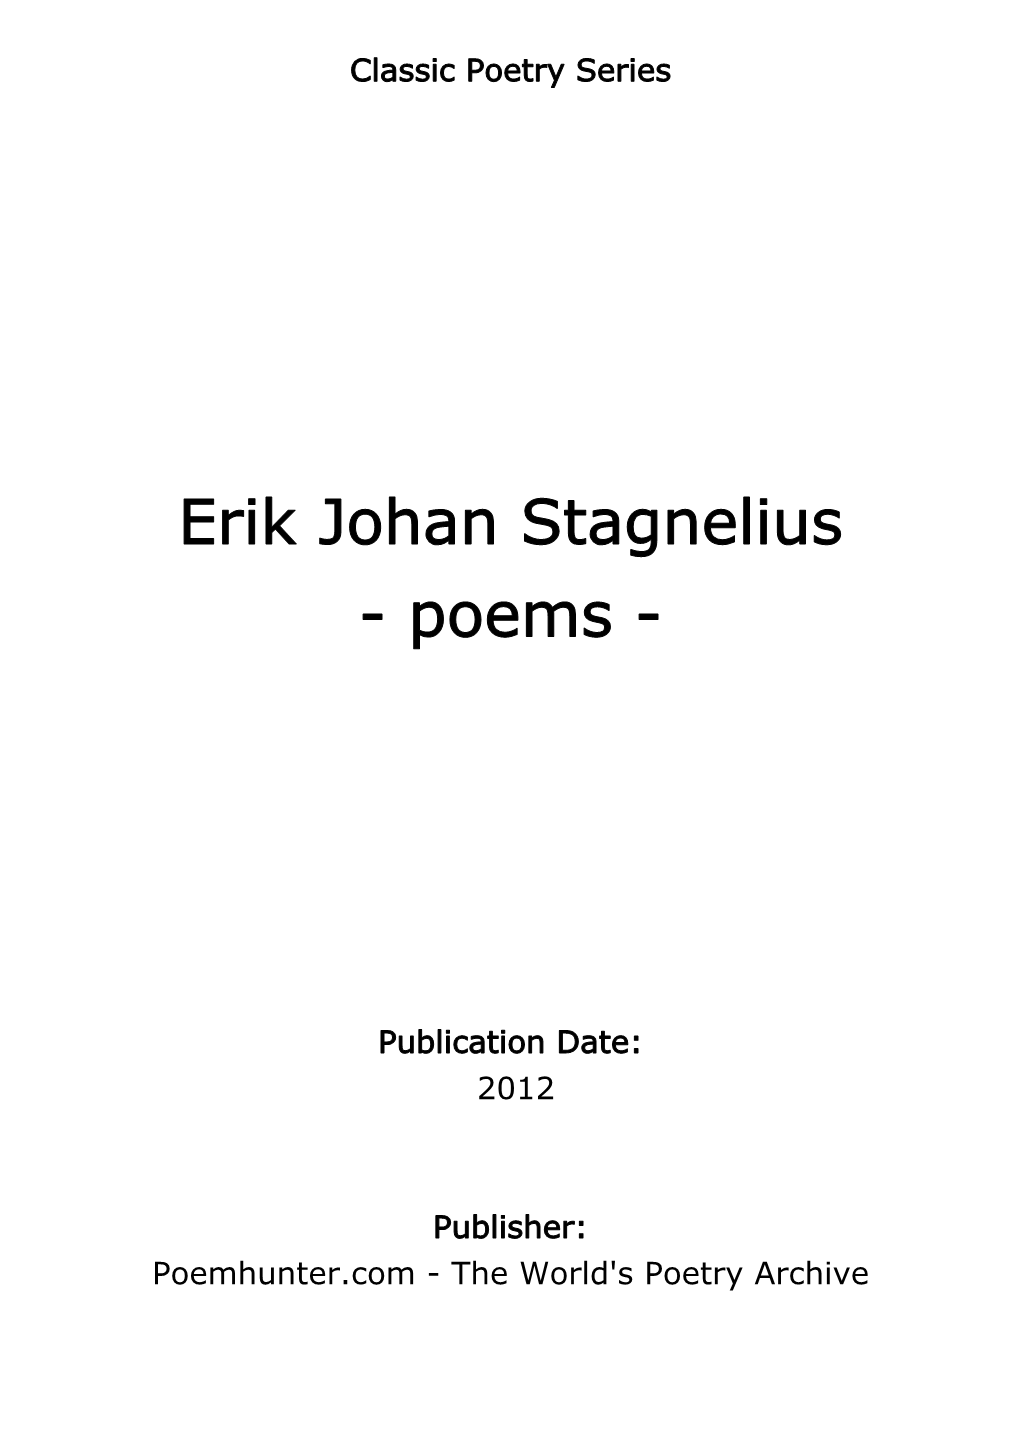 Erik Johan Stagnelius - Poems